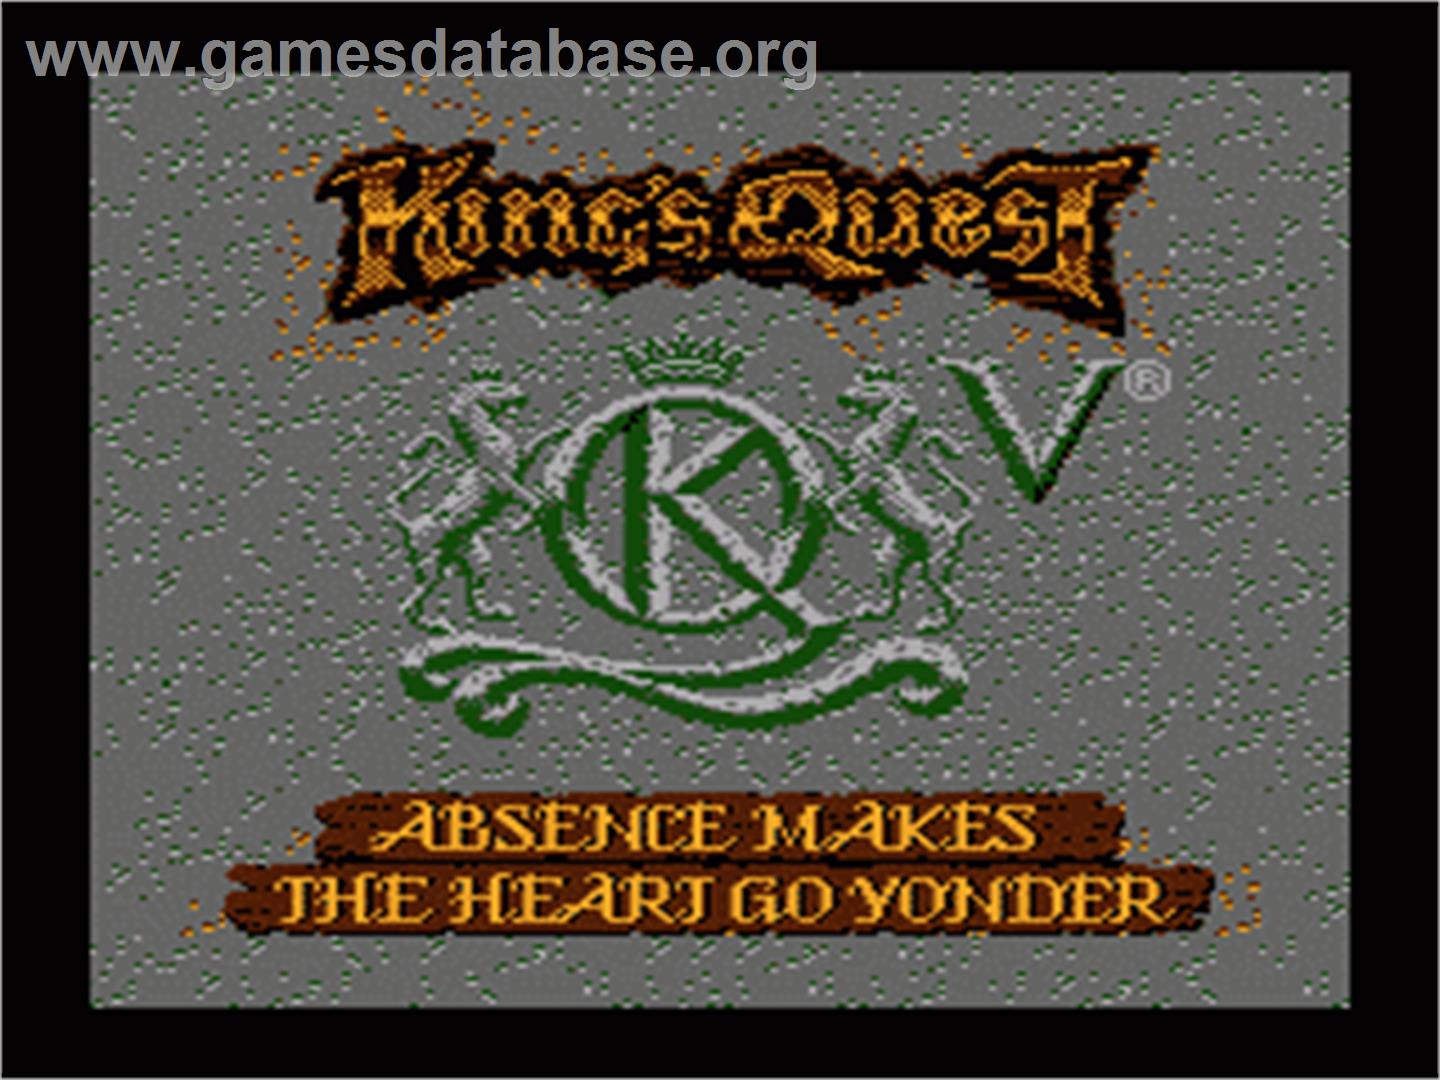 King's Quest V: Absence Makes the Heart Go Yonder - Nintendo NES - Artwork - Title Screen